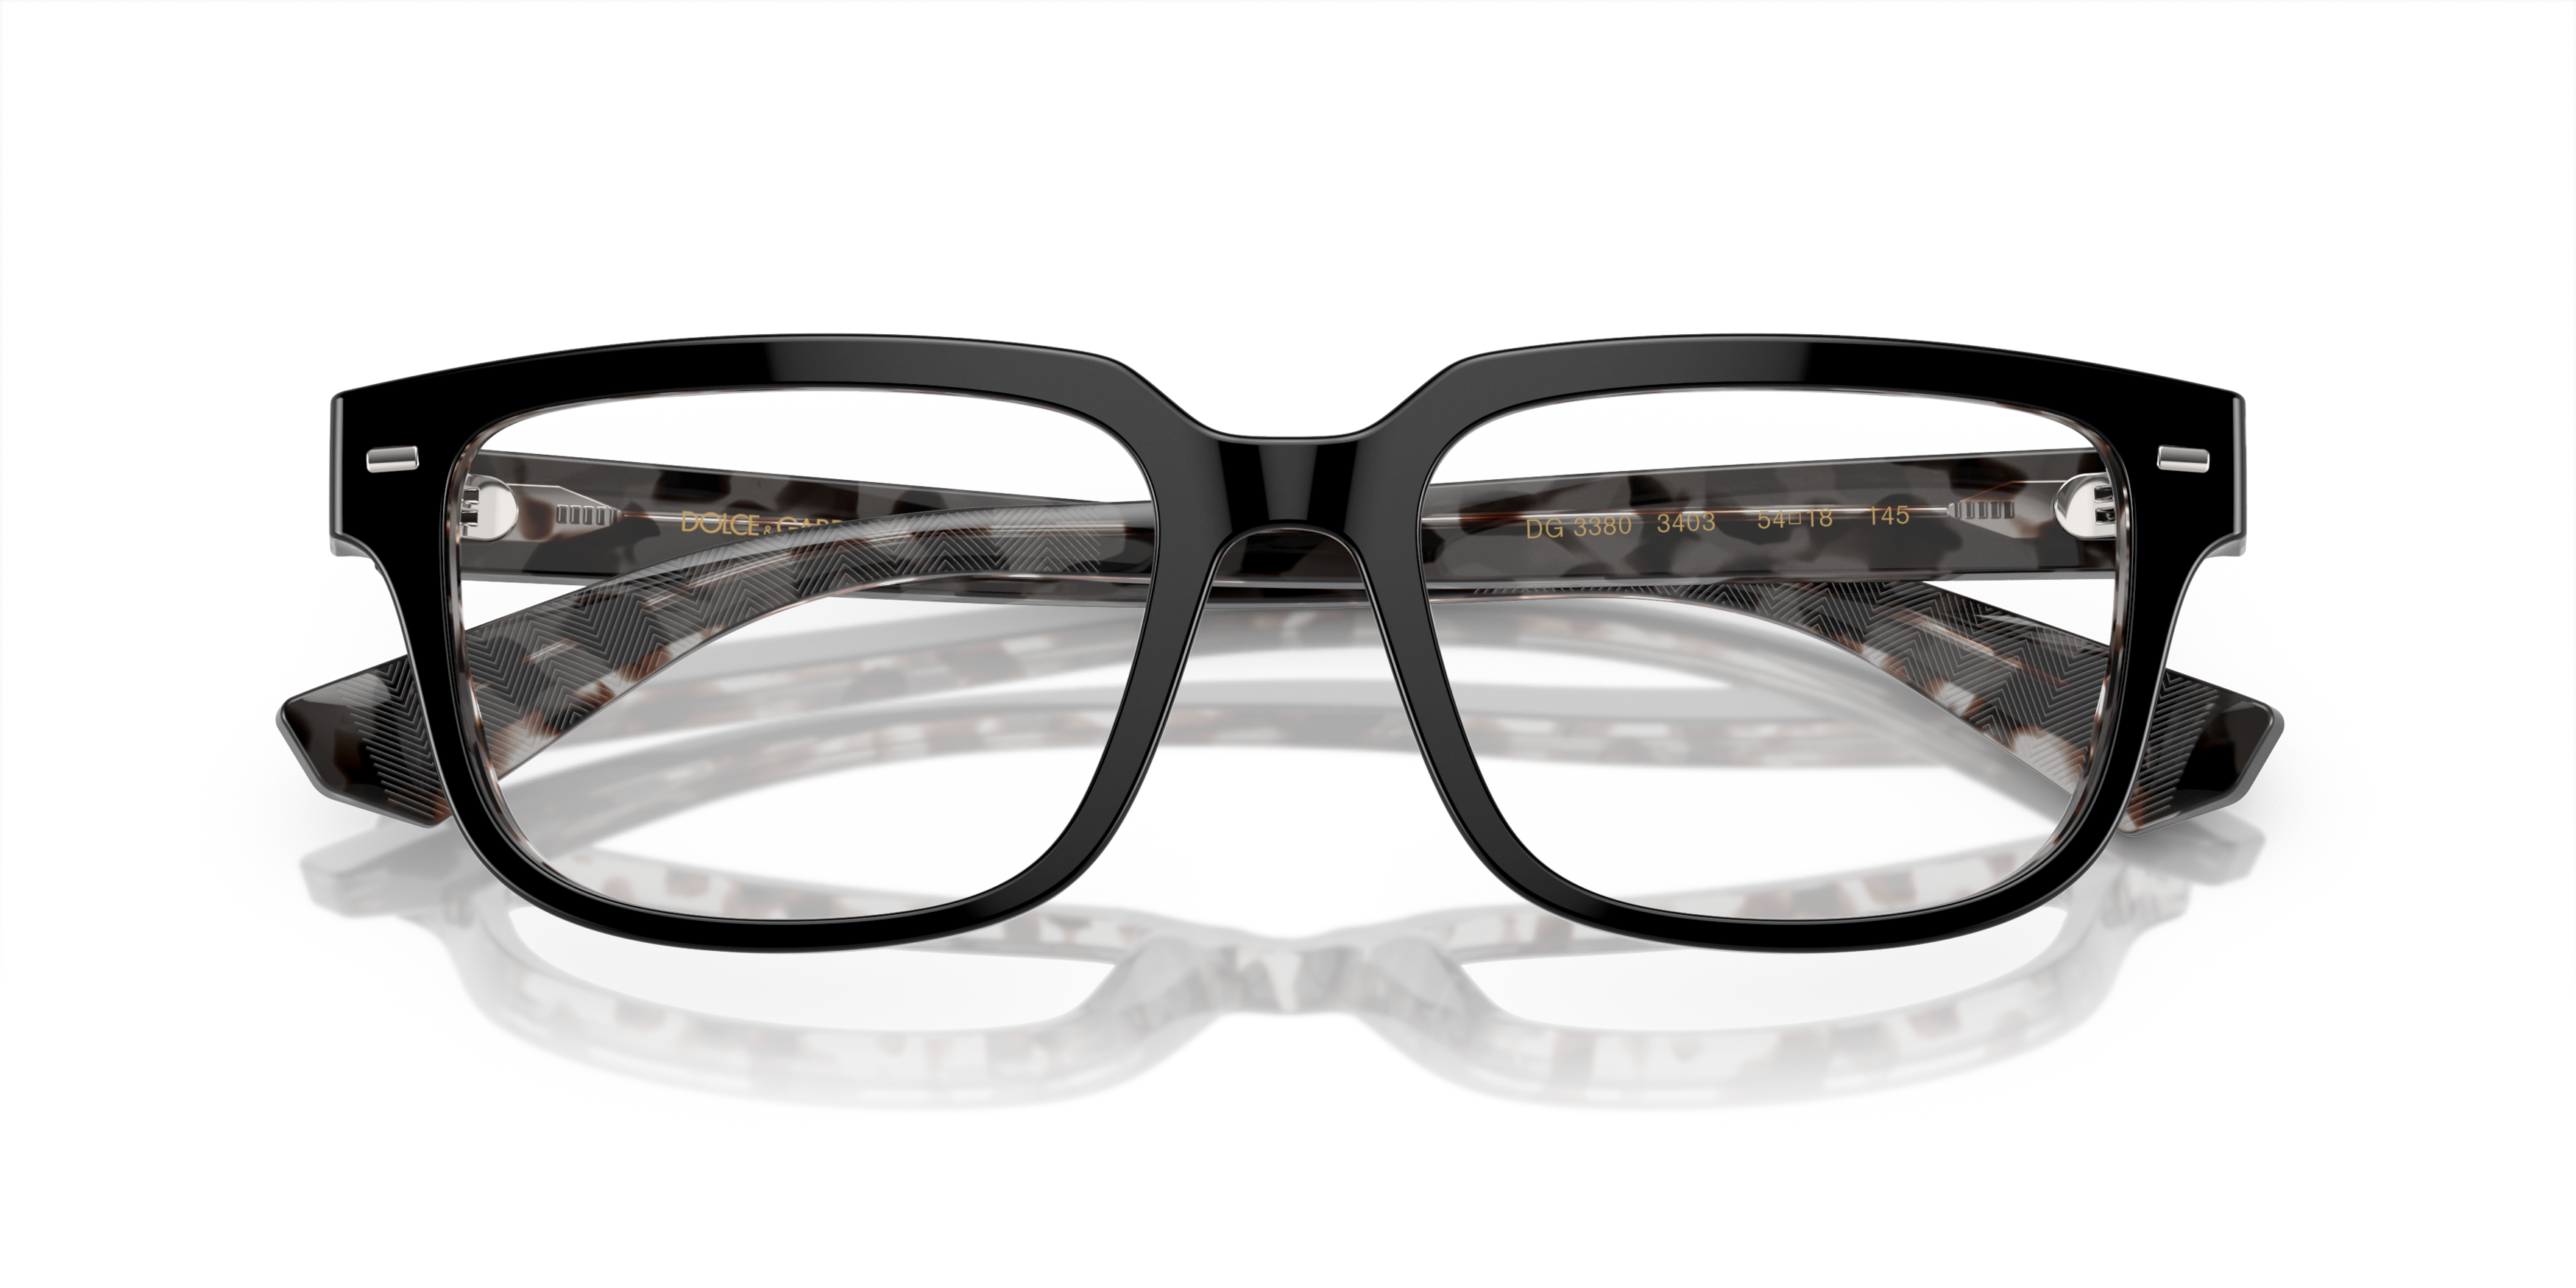 Folded Dolce & Gabbana DG 3380 Glasses Transparent / Black